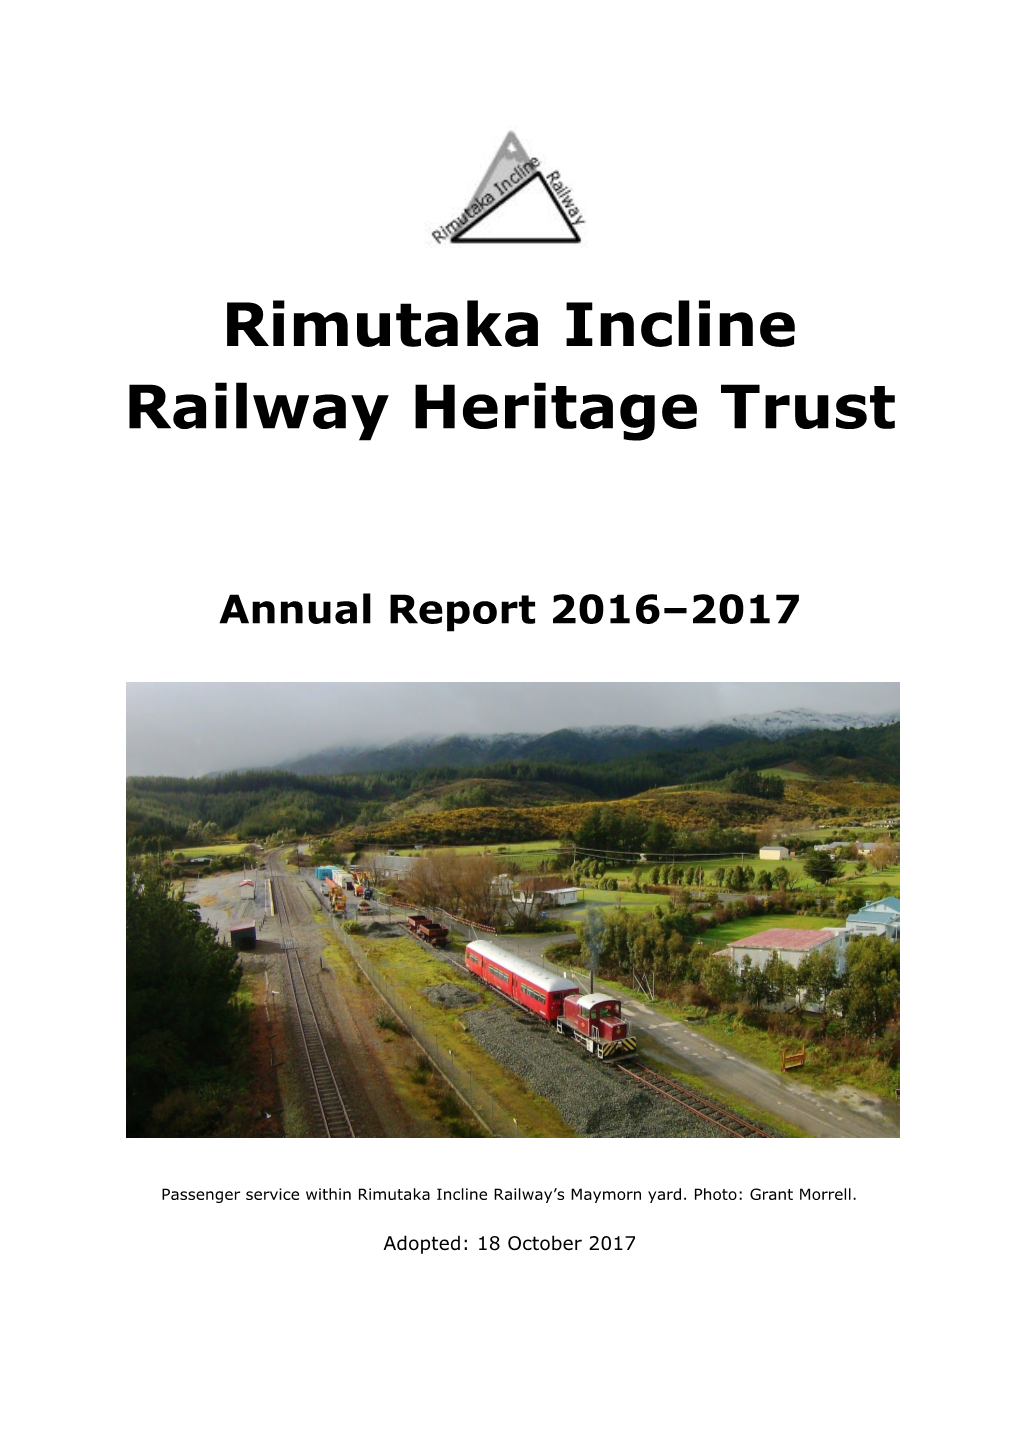 2016-2017 Annual Report